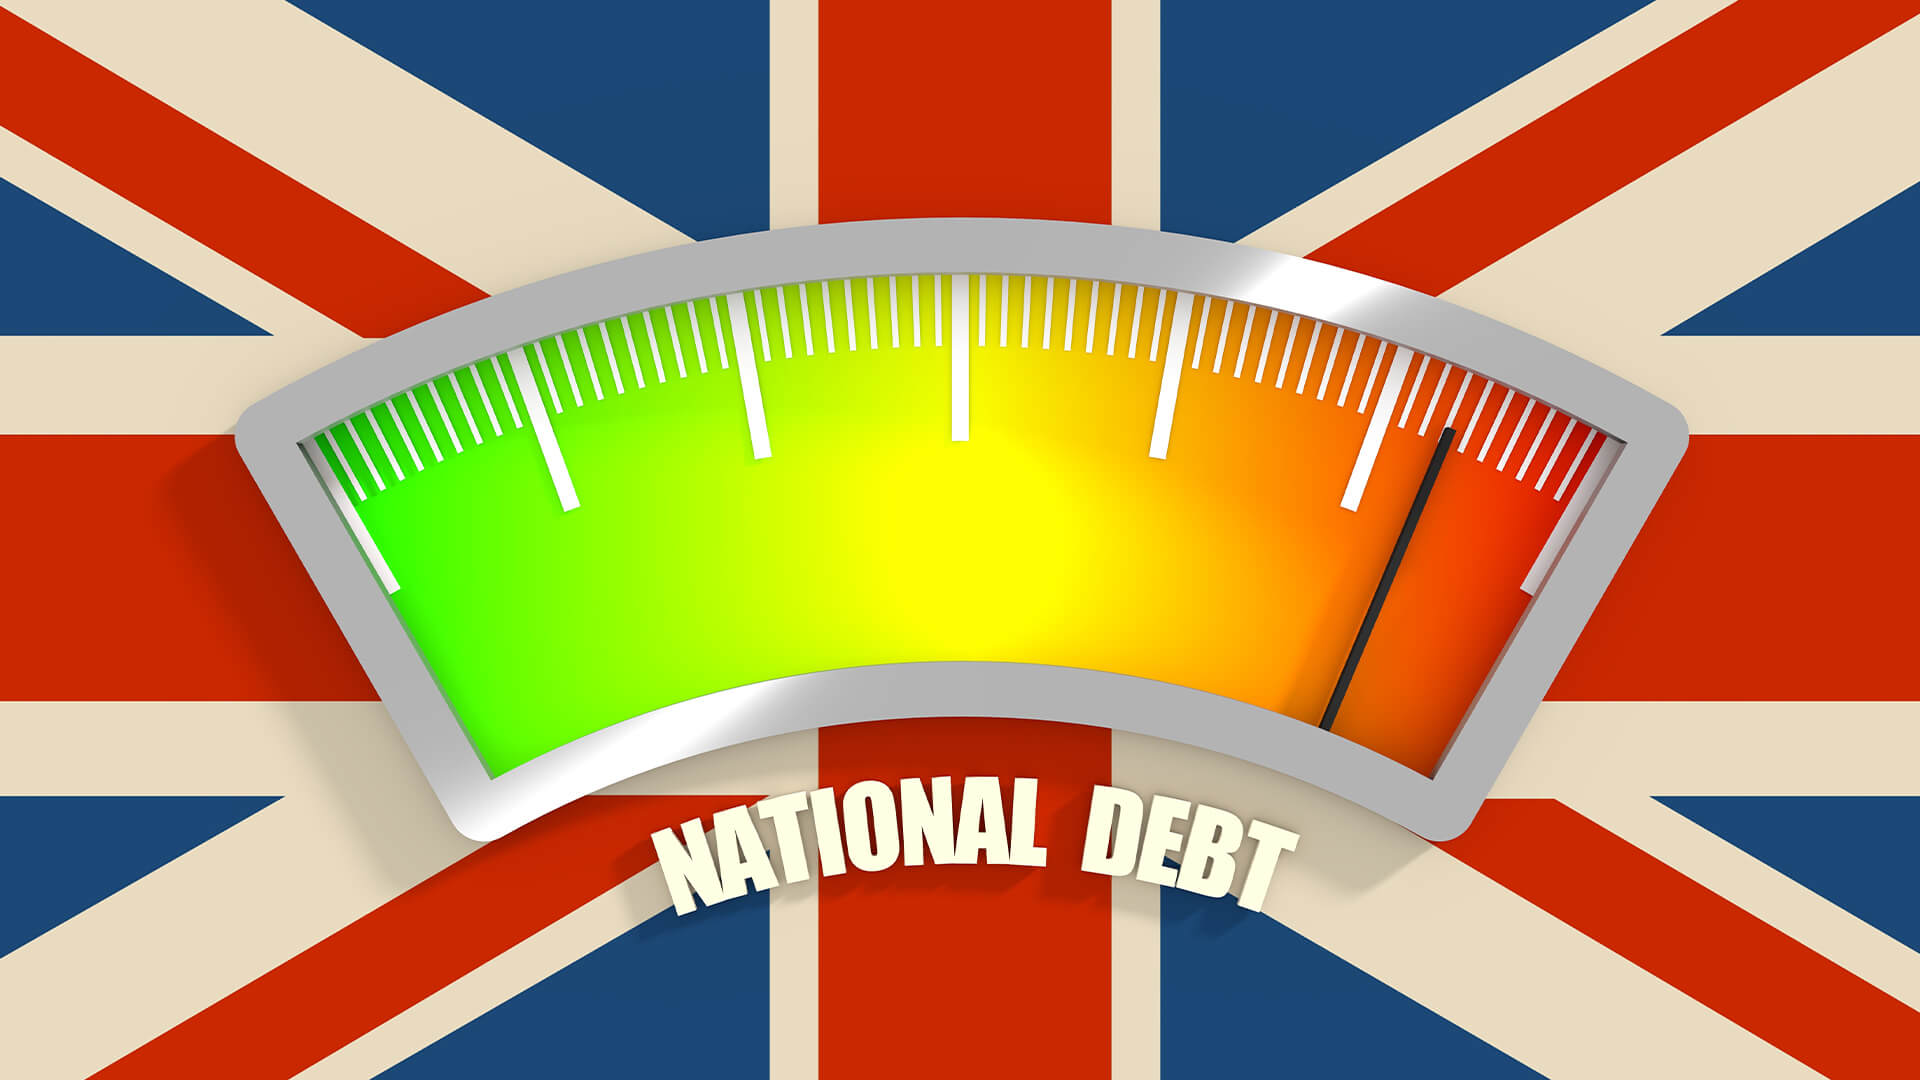 National debt